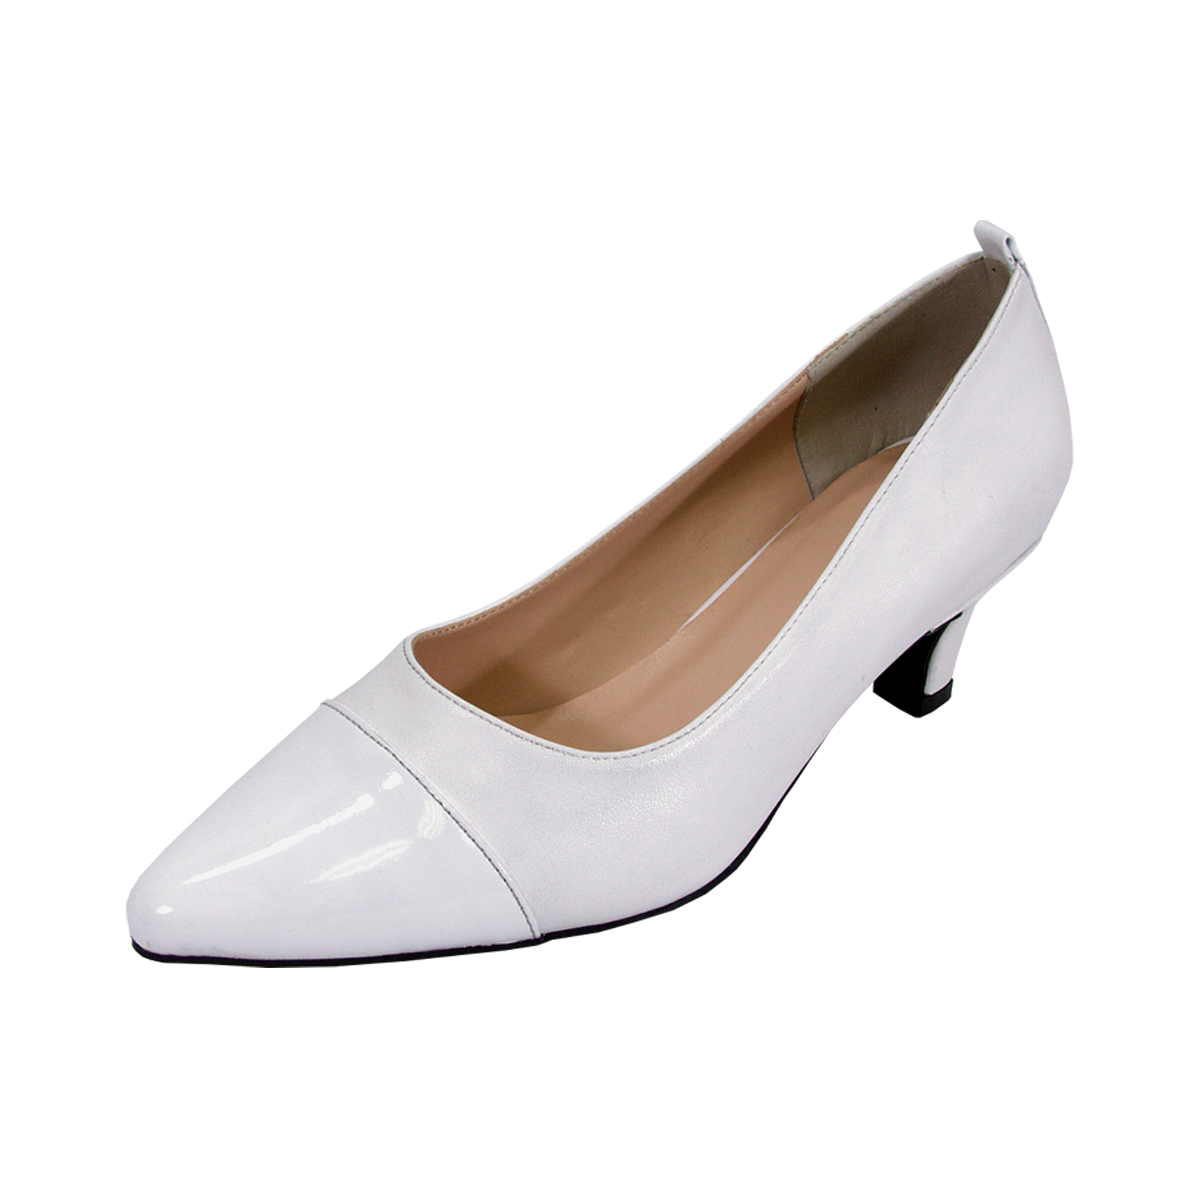 PEERAGE Arlene Women's Wide Width Casual Comfort Mid Heel Dress Shoes for Wedding, Prom, Evening, Work WHITE 7.5 - image 1 of 6